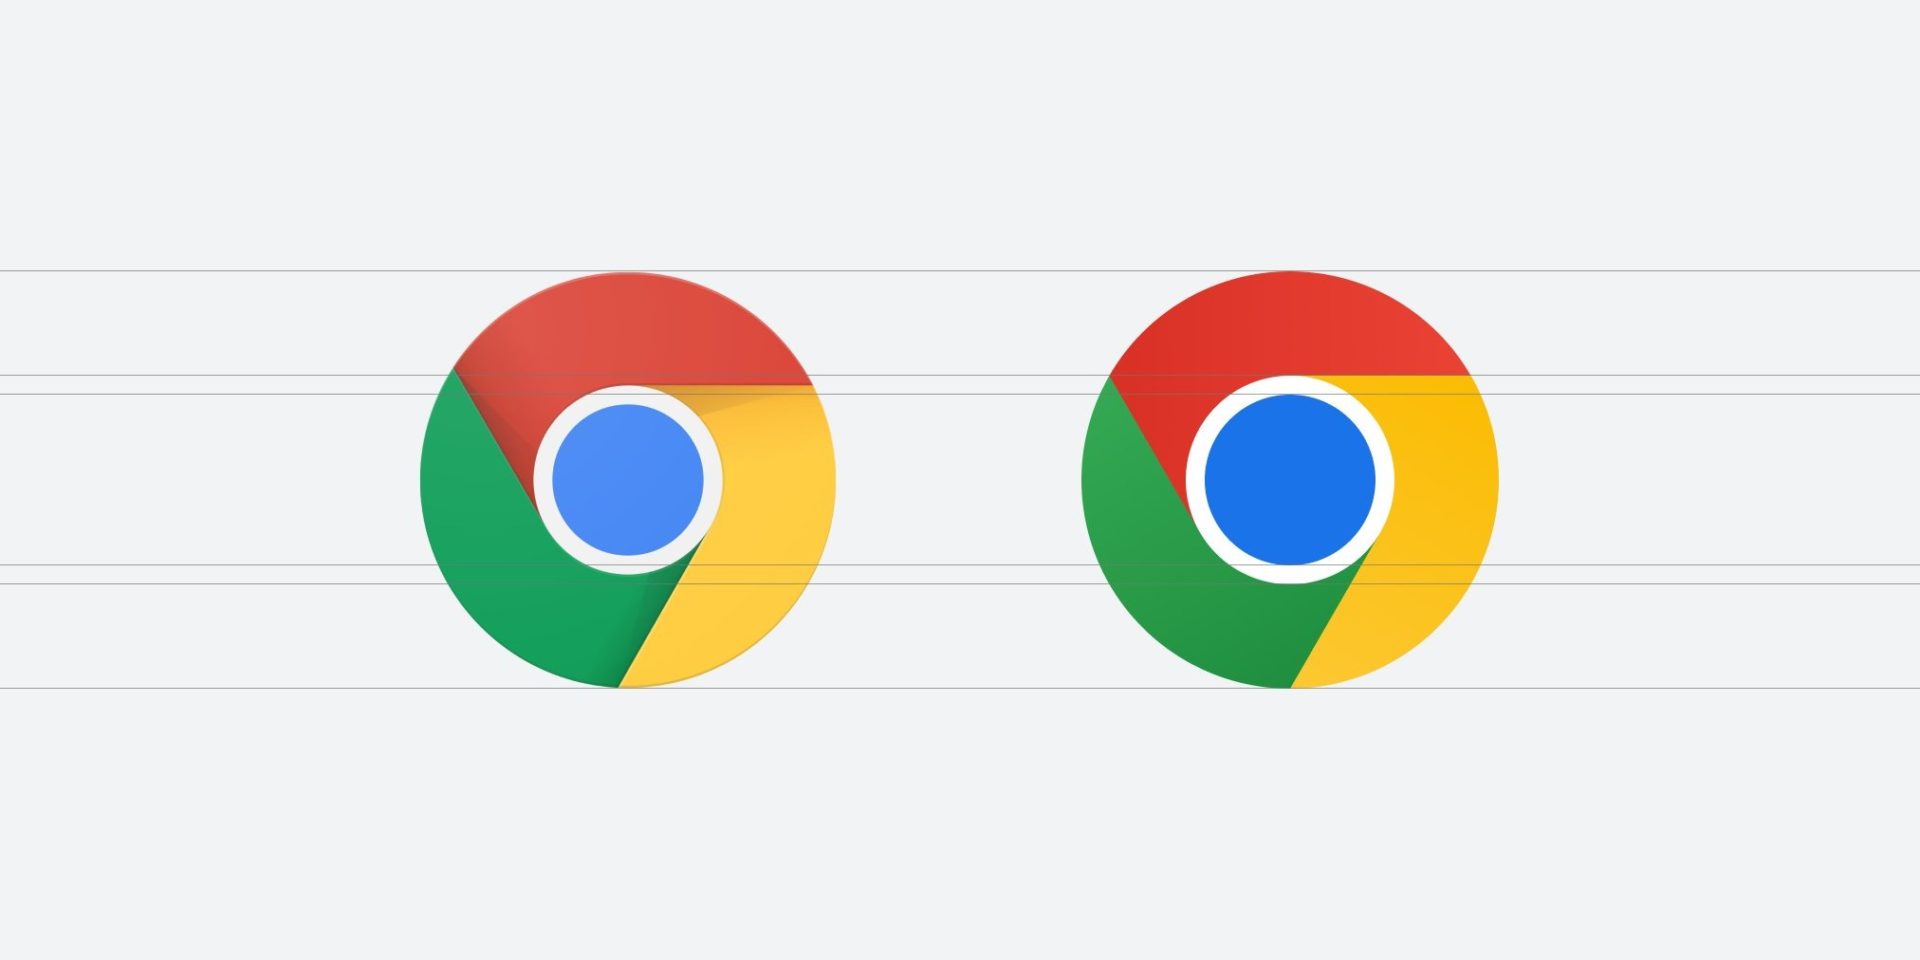 Google Chrome เปลี่ยนโลโก้ใหม่ในรอบ 8 ปี แยกของแต่ละแพลตฟอร์มด้วย